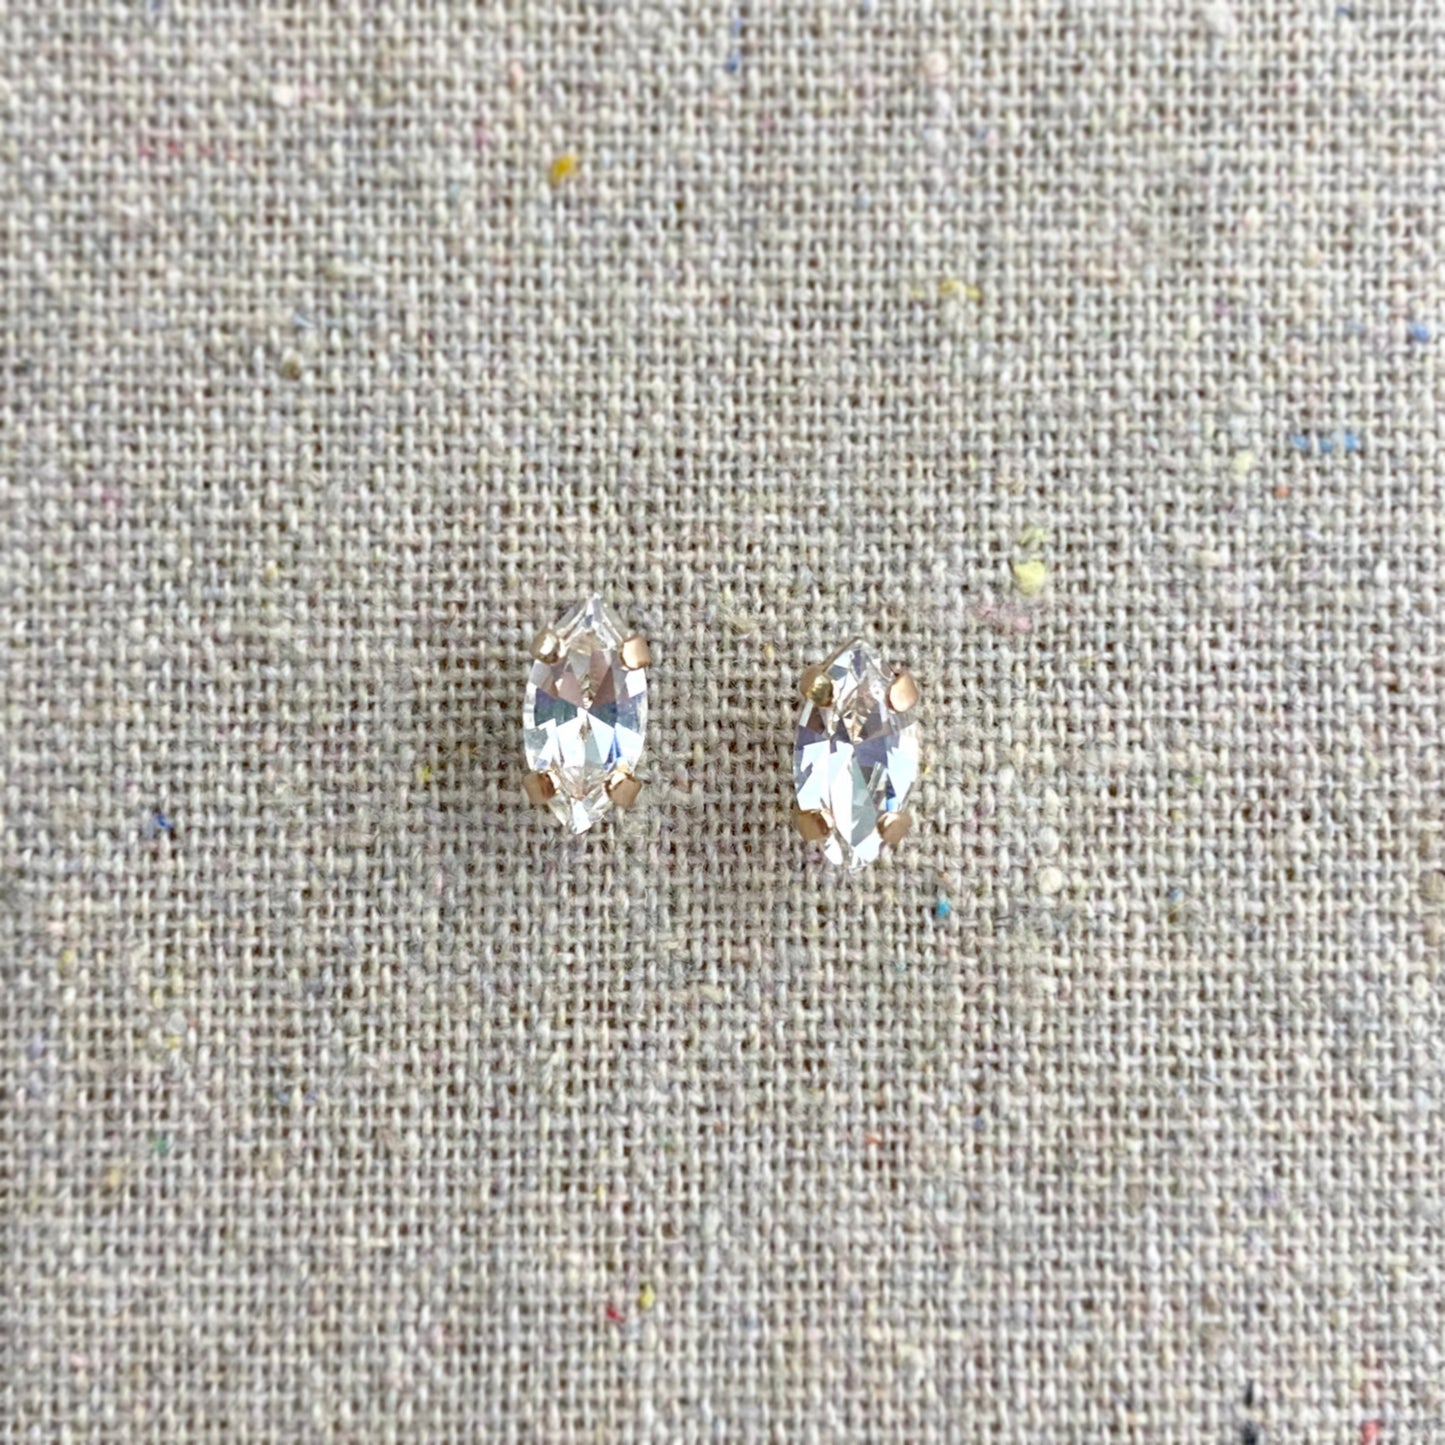 Marquise Post Earrings • Medium